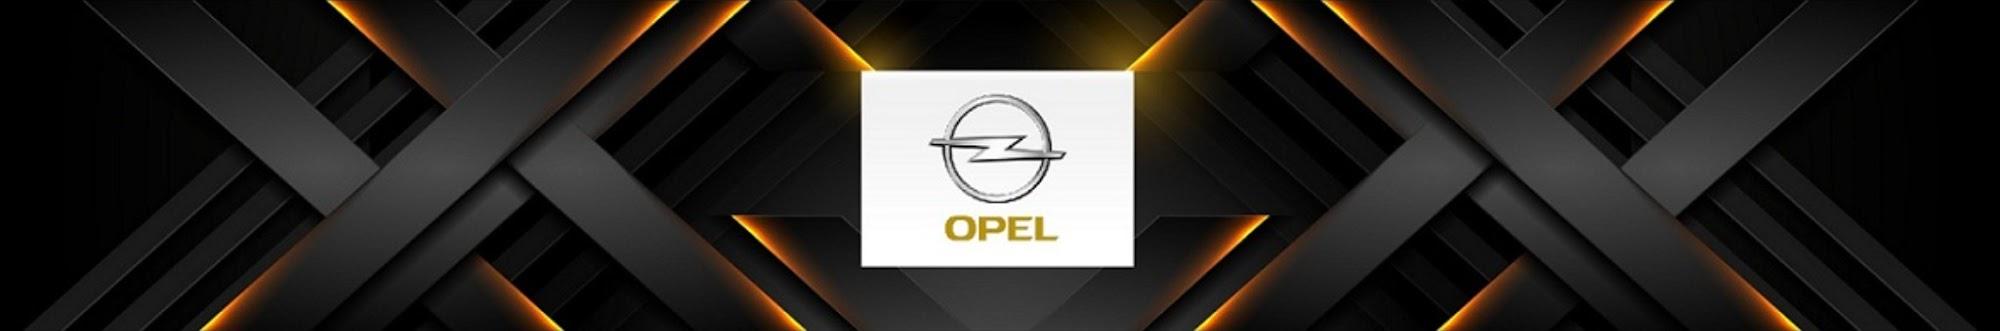 Opel Astra G -  Ремонт авто своими руками